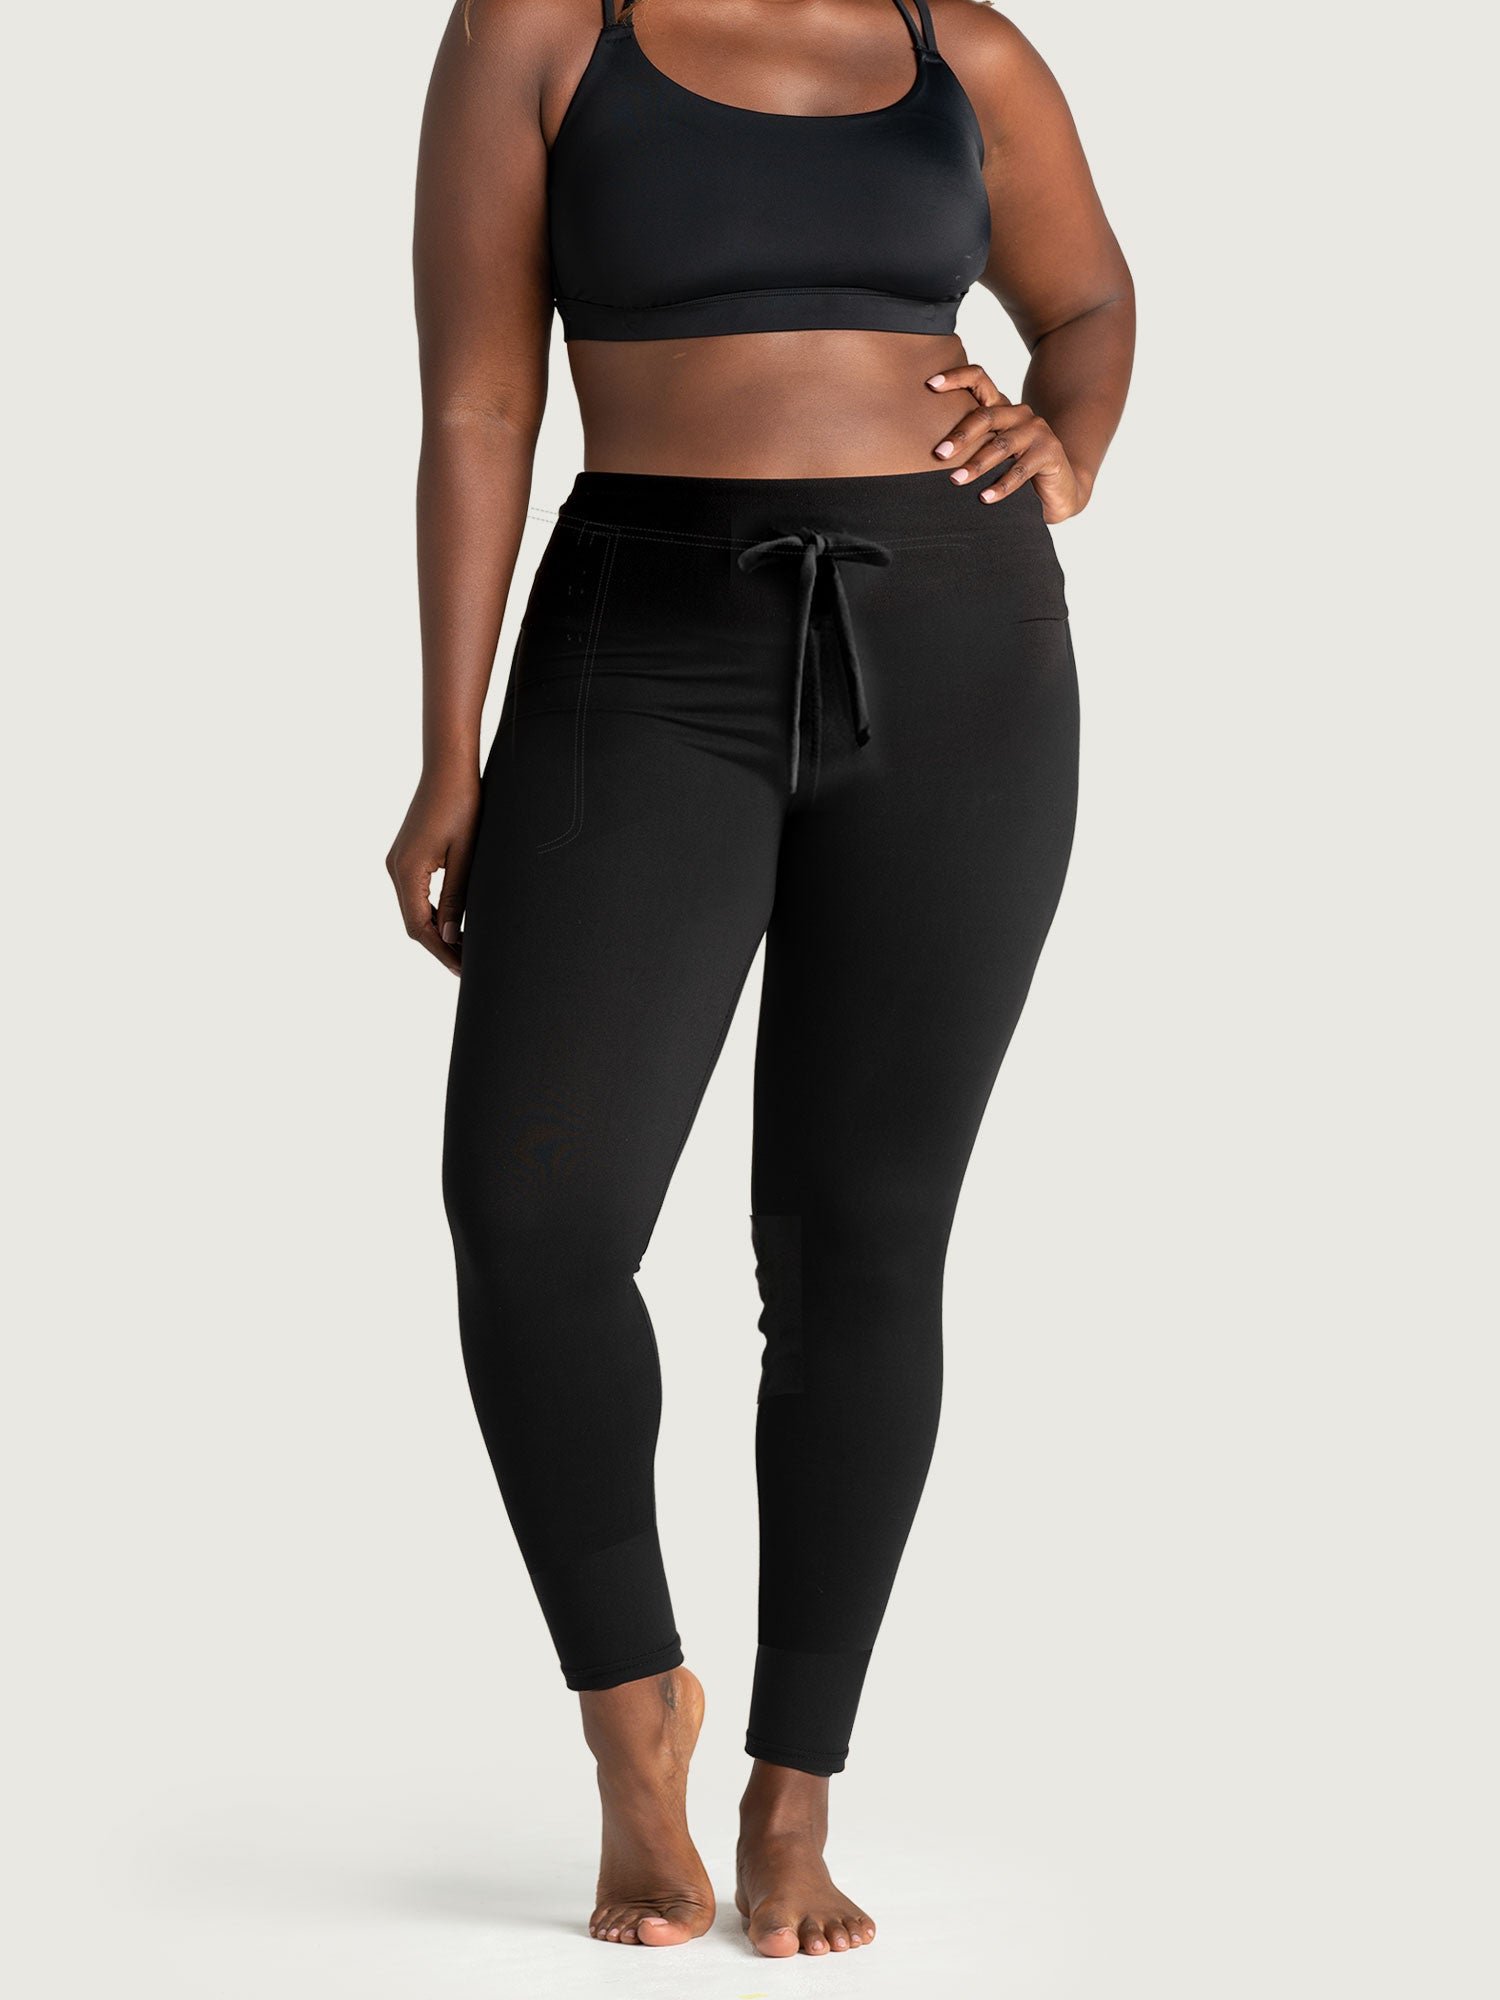 Buy Lounge Leggings - High Waisted Workout Gym Yoga Basic Pants